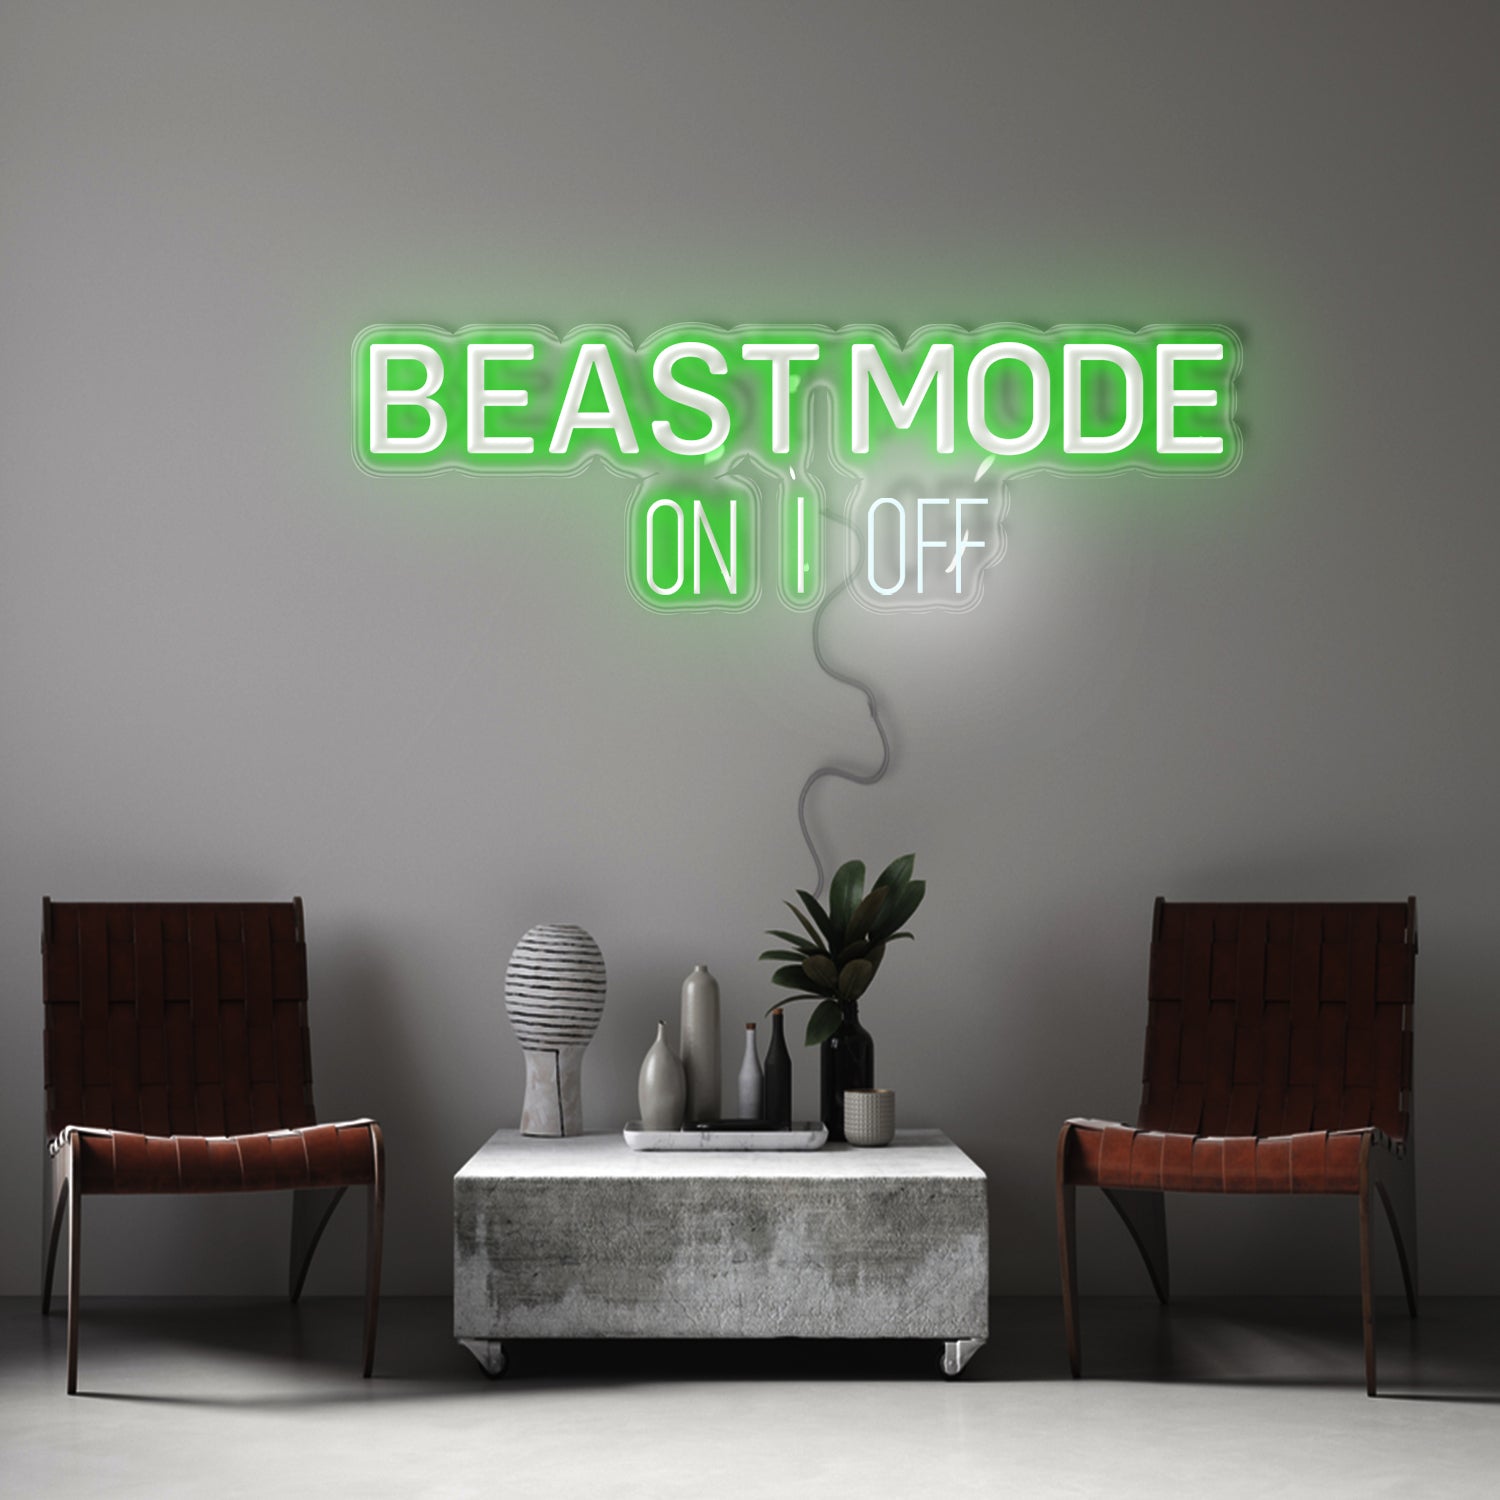 Beast mode - on off